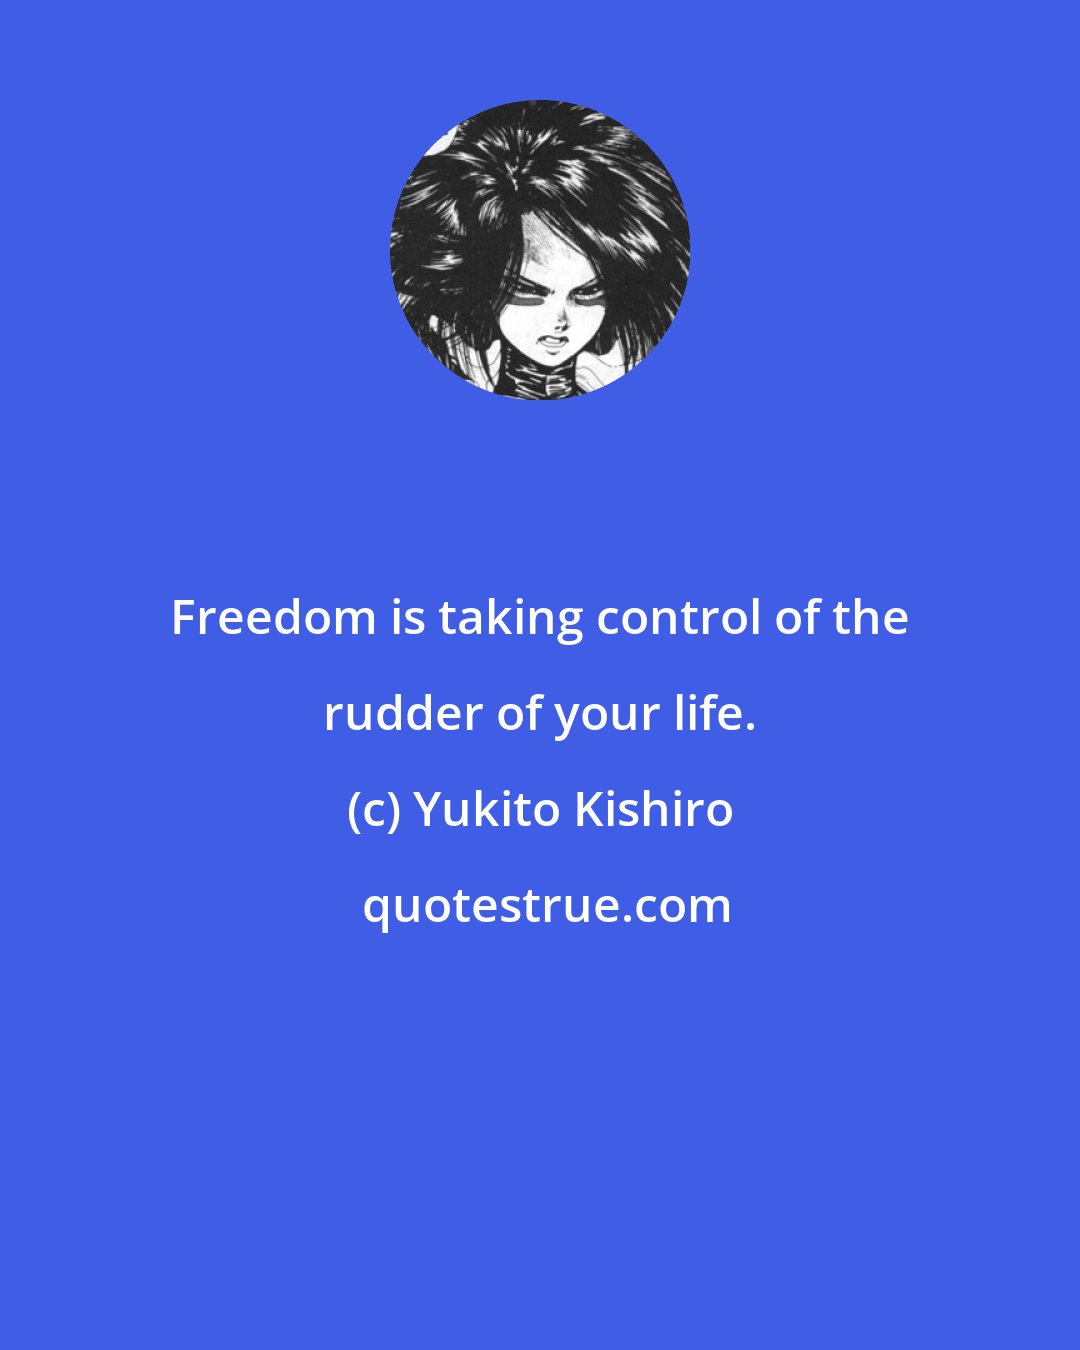 Yukito Kishiro: Freedom is taking control of the rudder of your life.